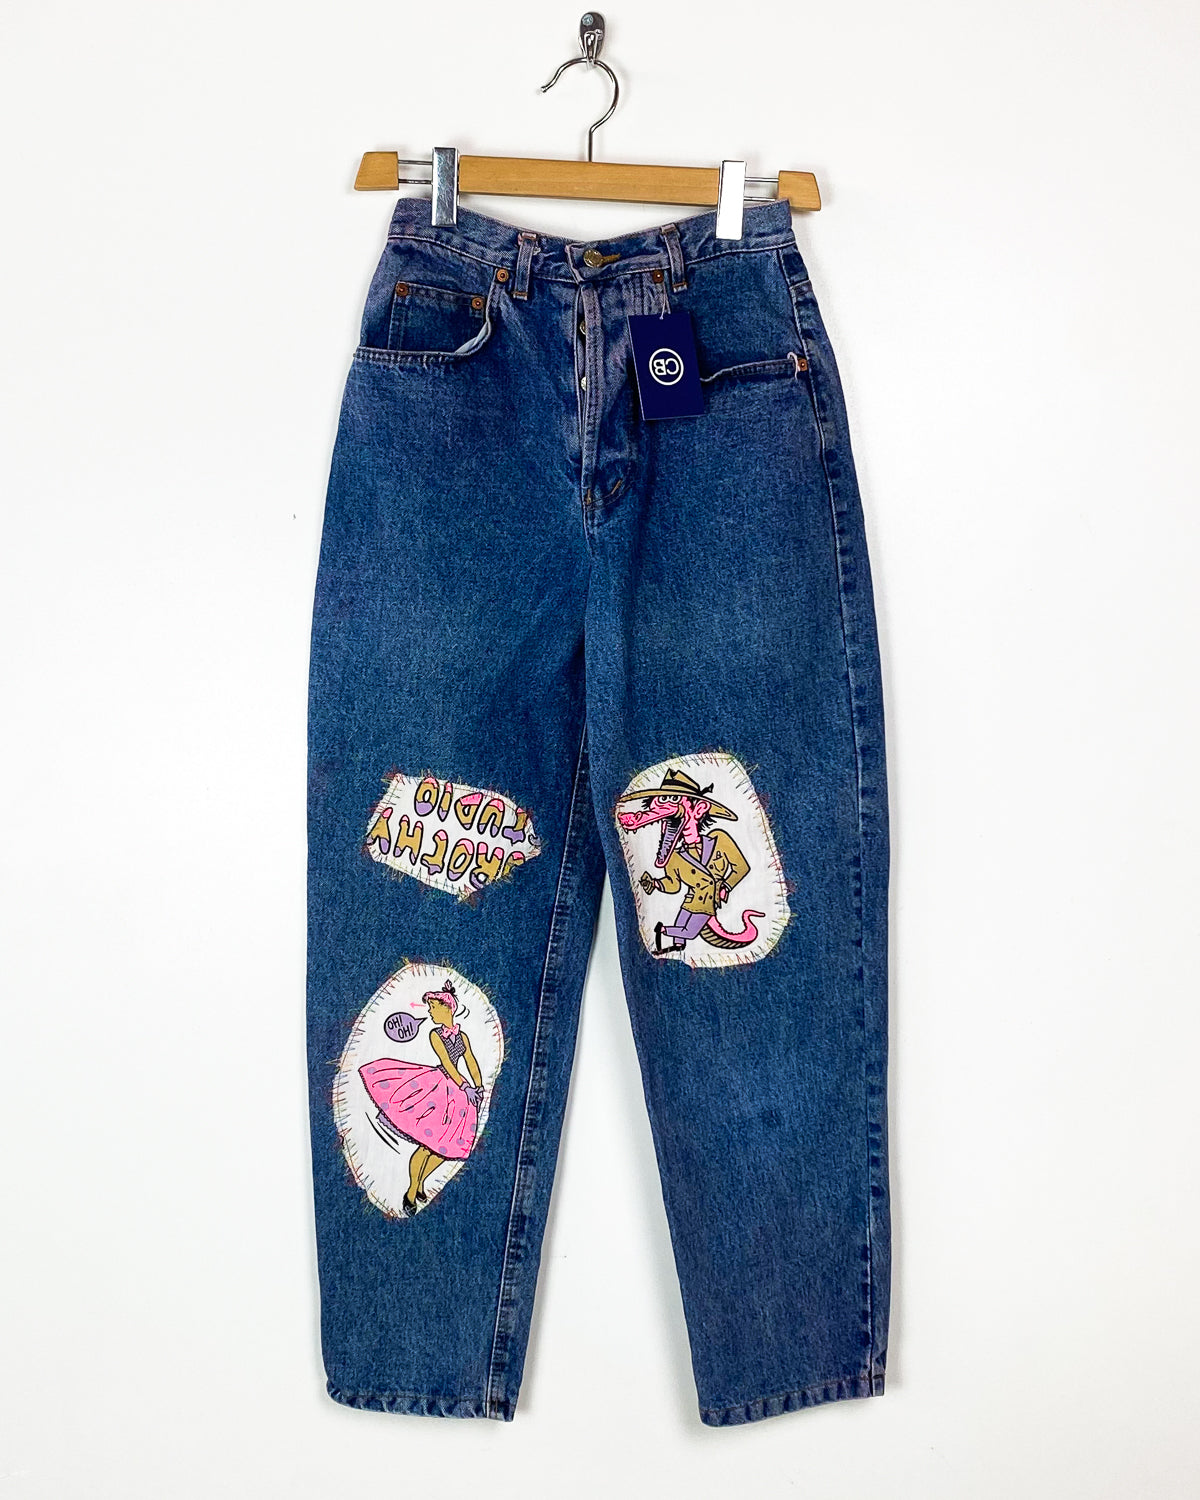 Jeans Vintage Patchwork Taglia 42